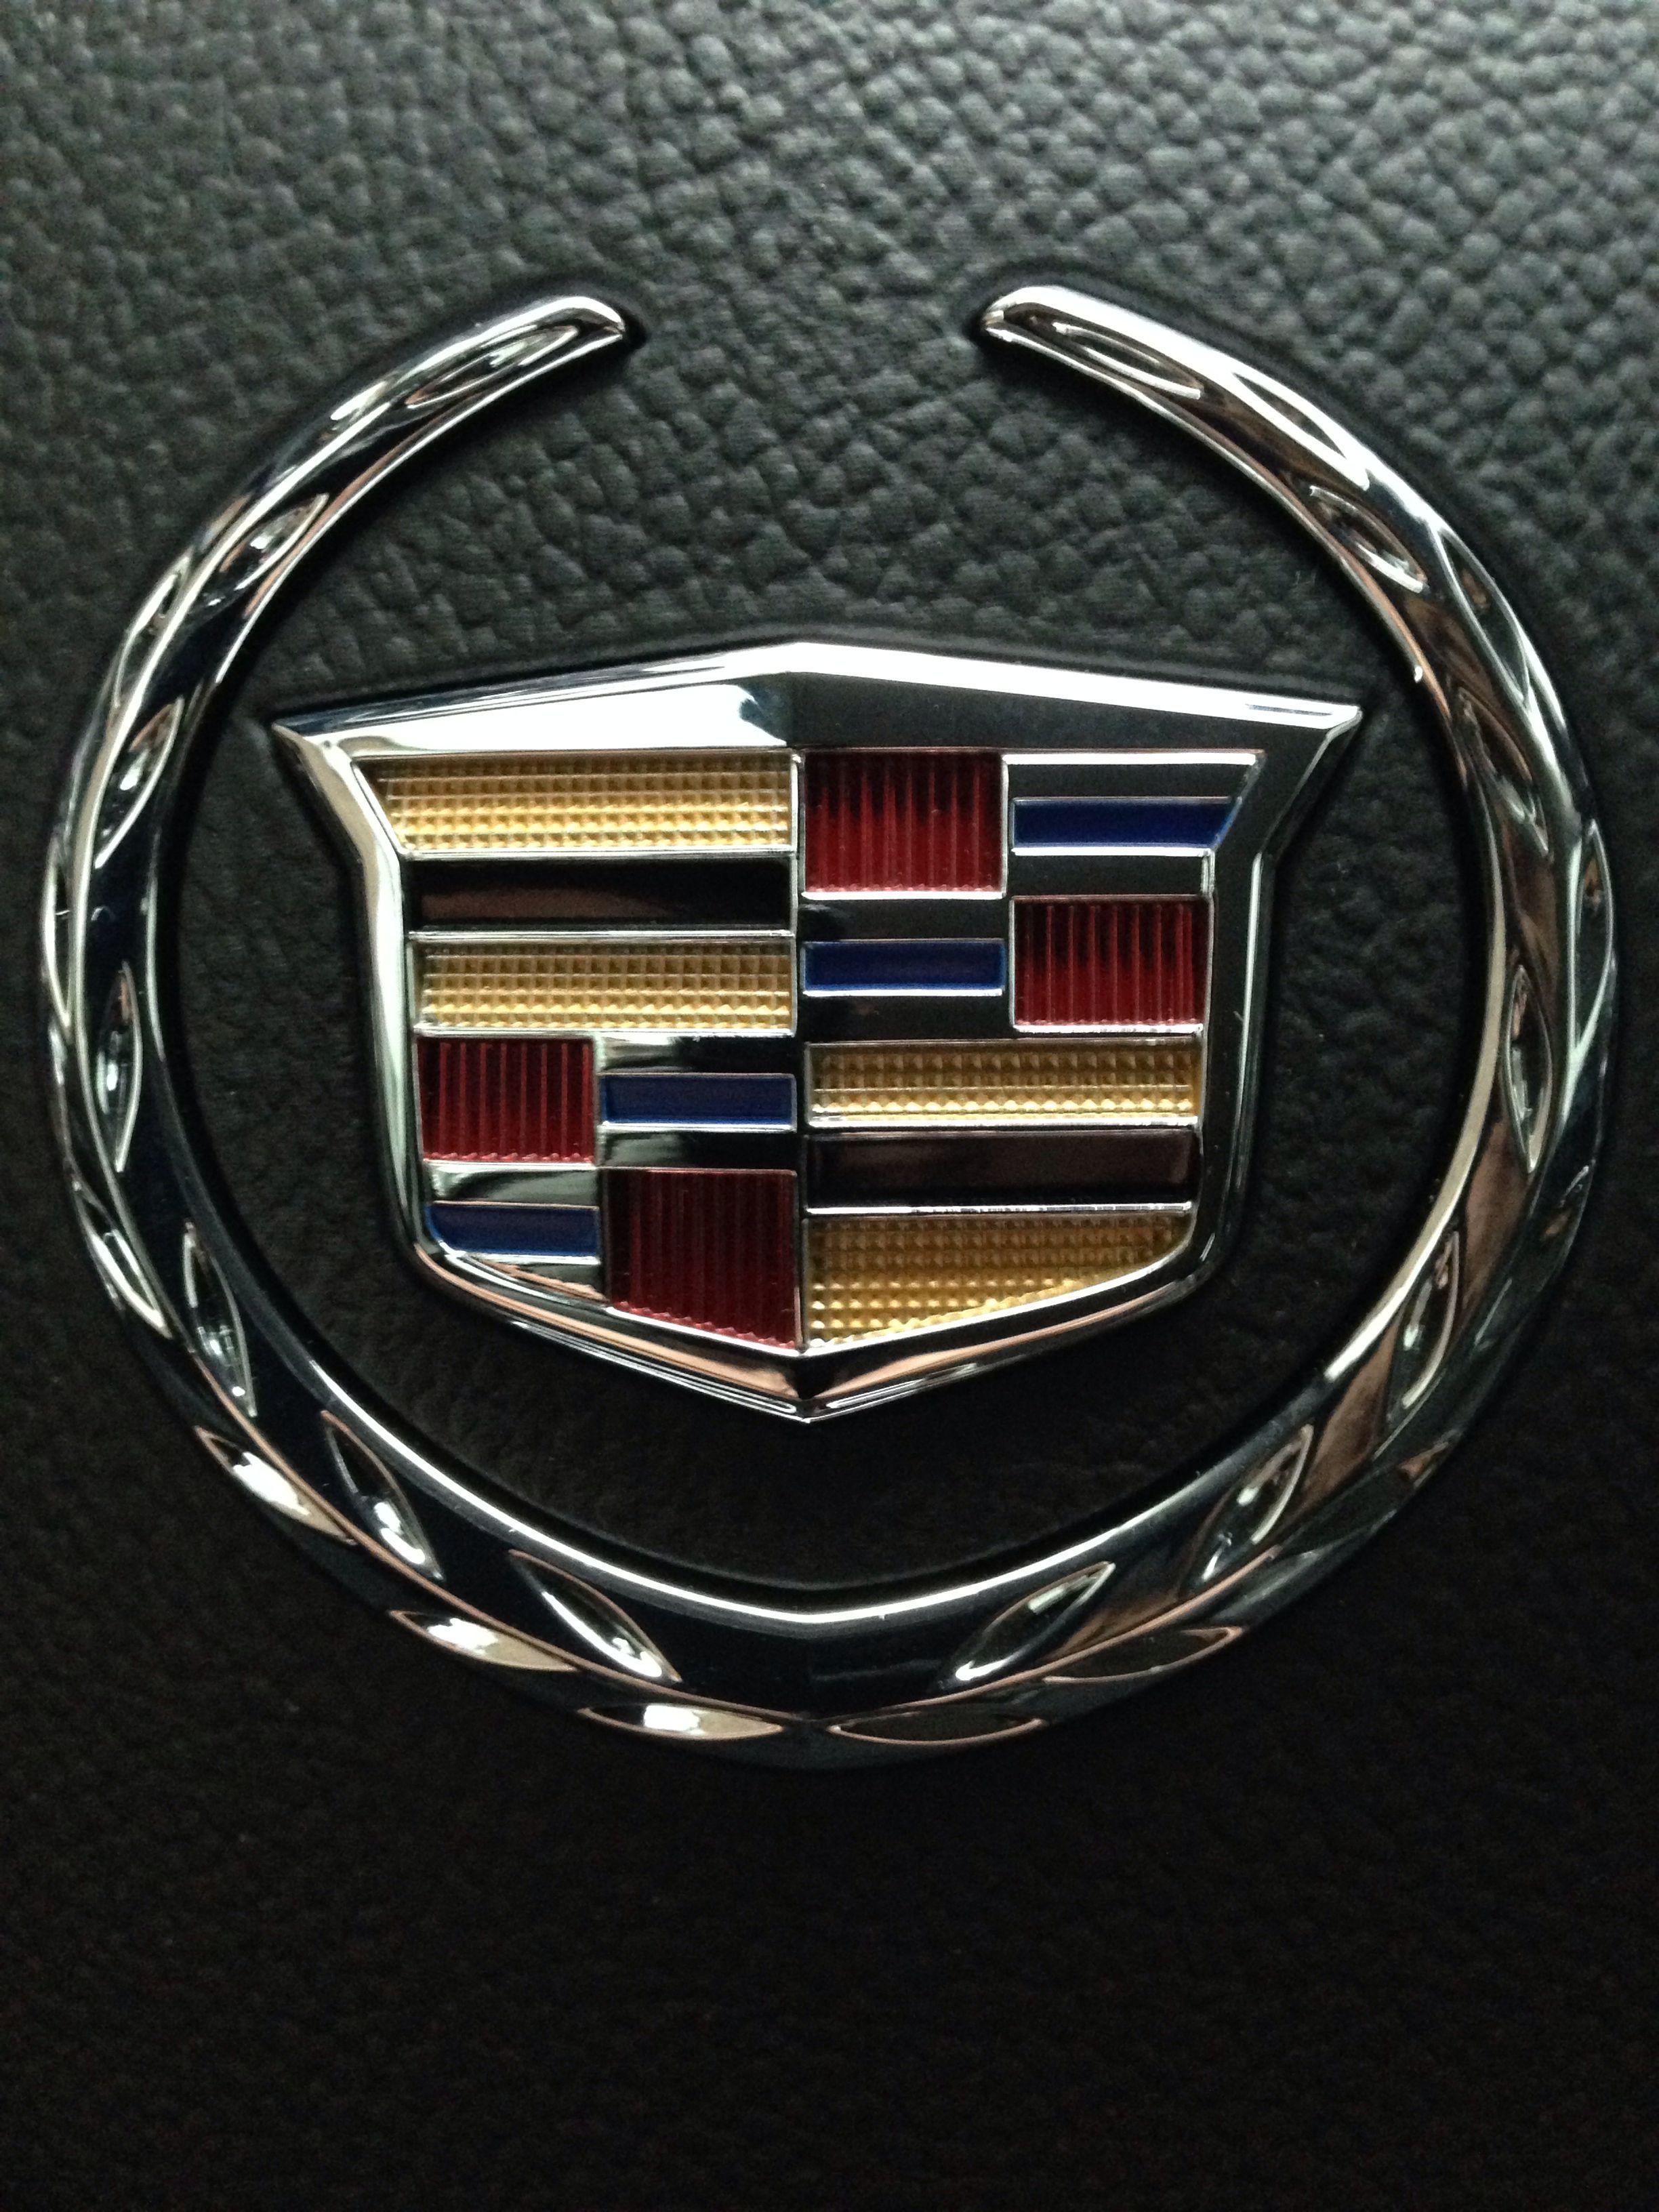 2014 Cadillac Logo - 2014 Cadillac SRX Got mine today! 4/24/14 | #Cars | Pinterest ...